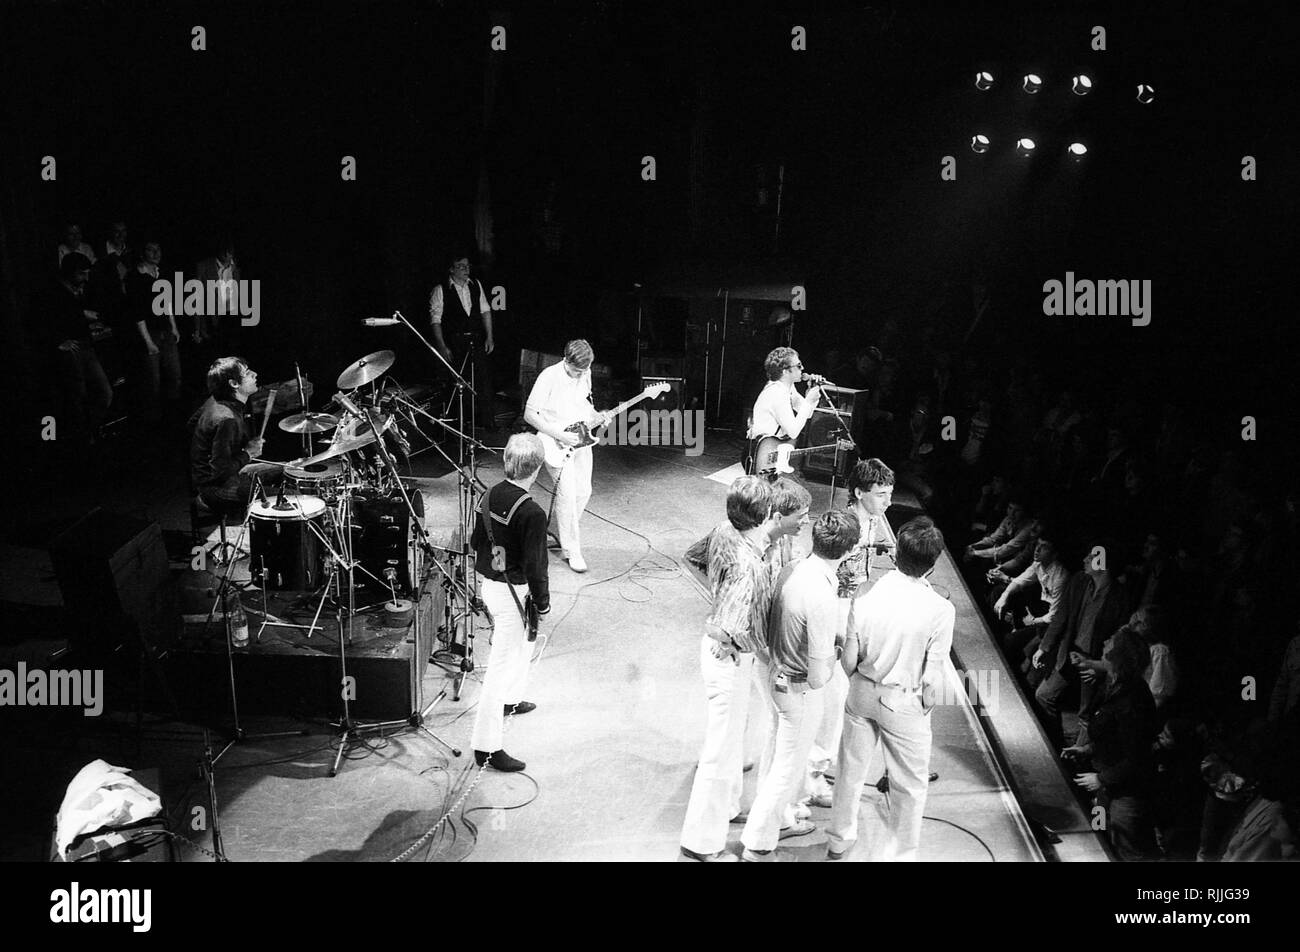 Bijou Group Concert in 1978 Stock Photo